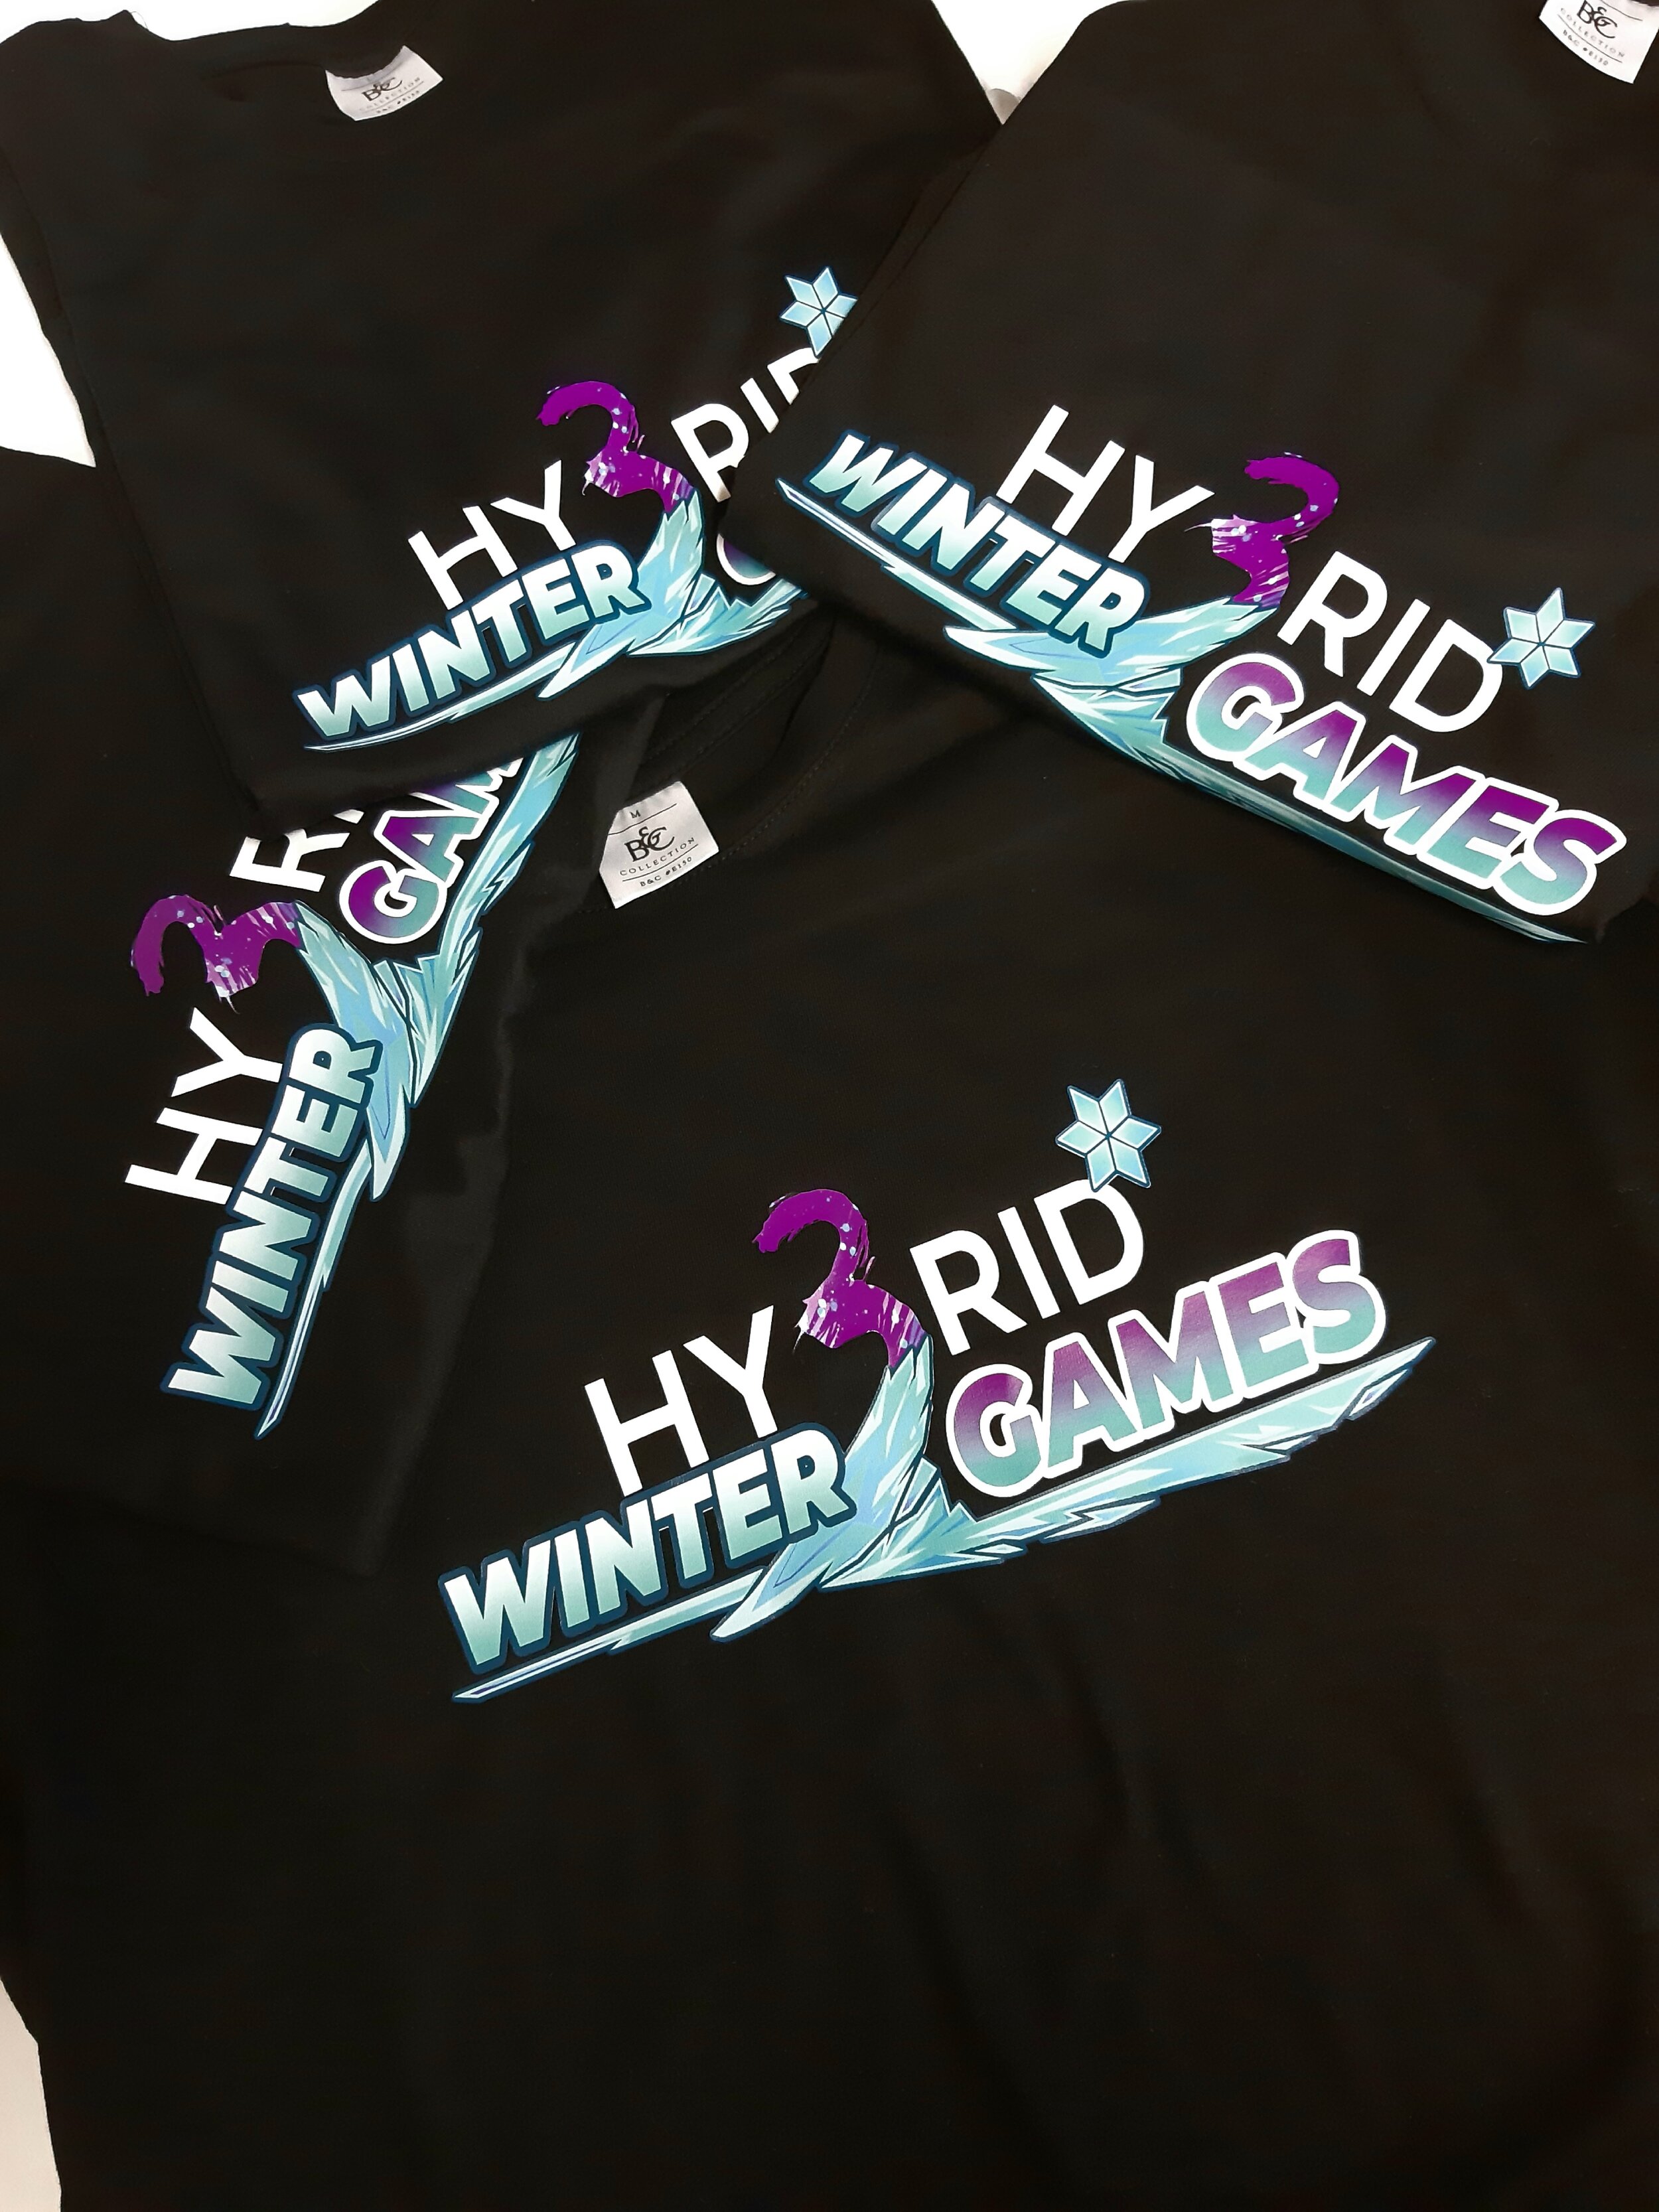 Hy3rid winter games 4.jpg